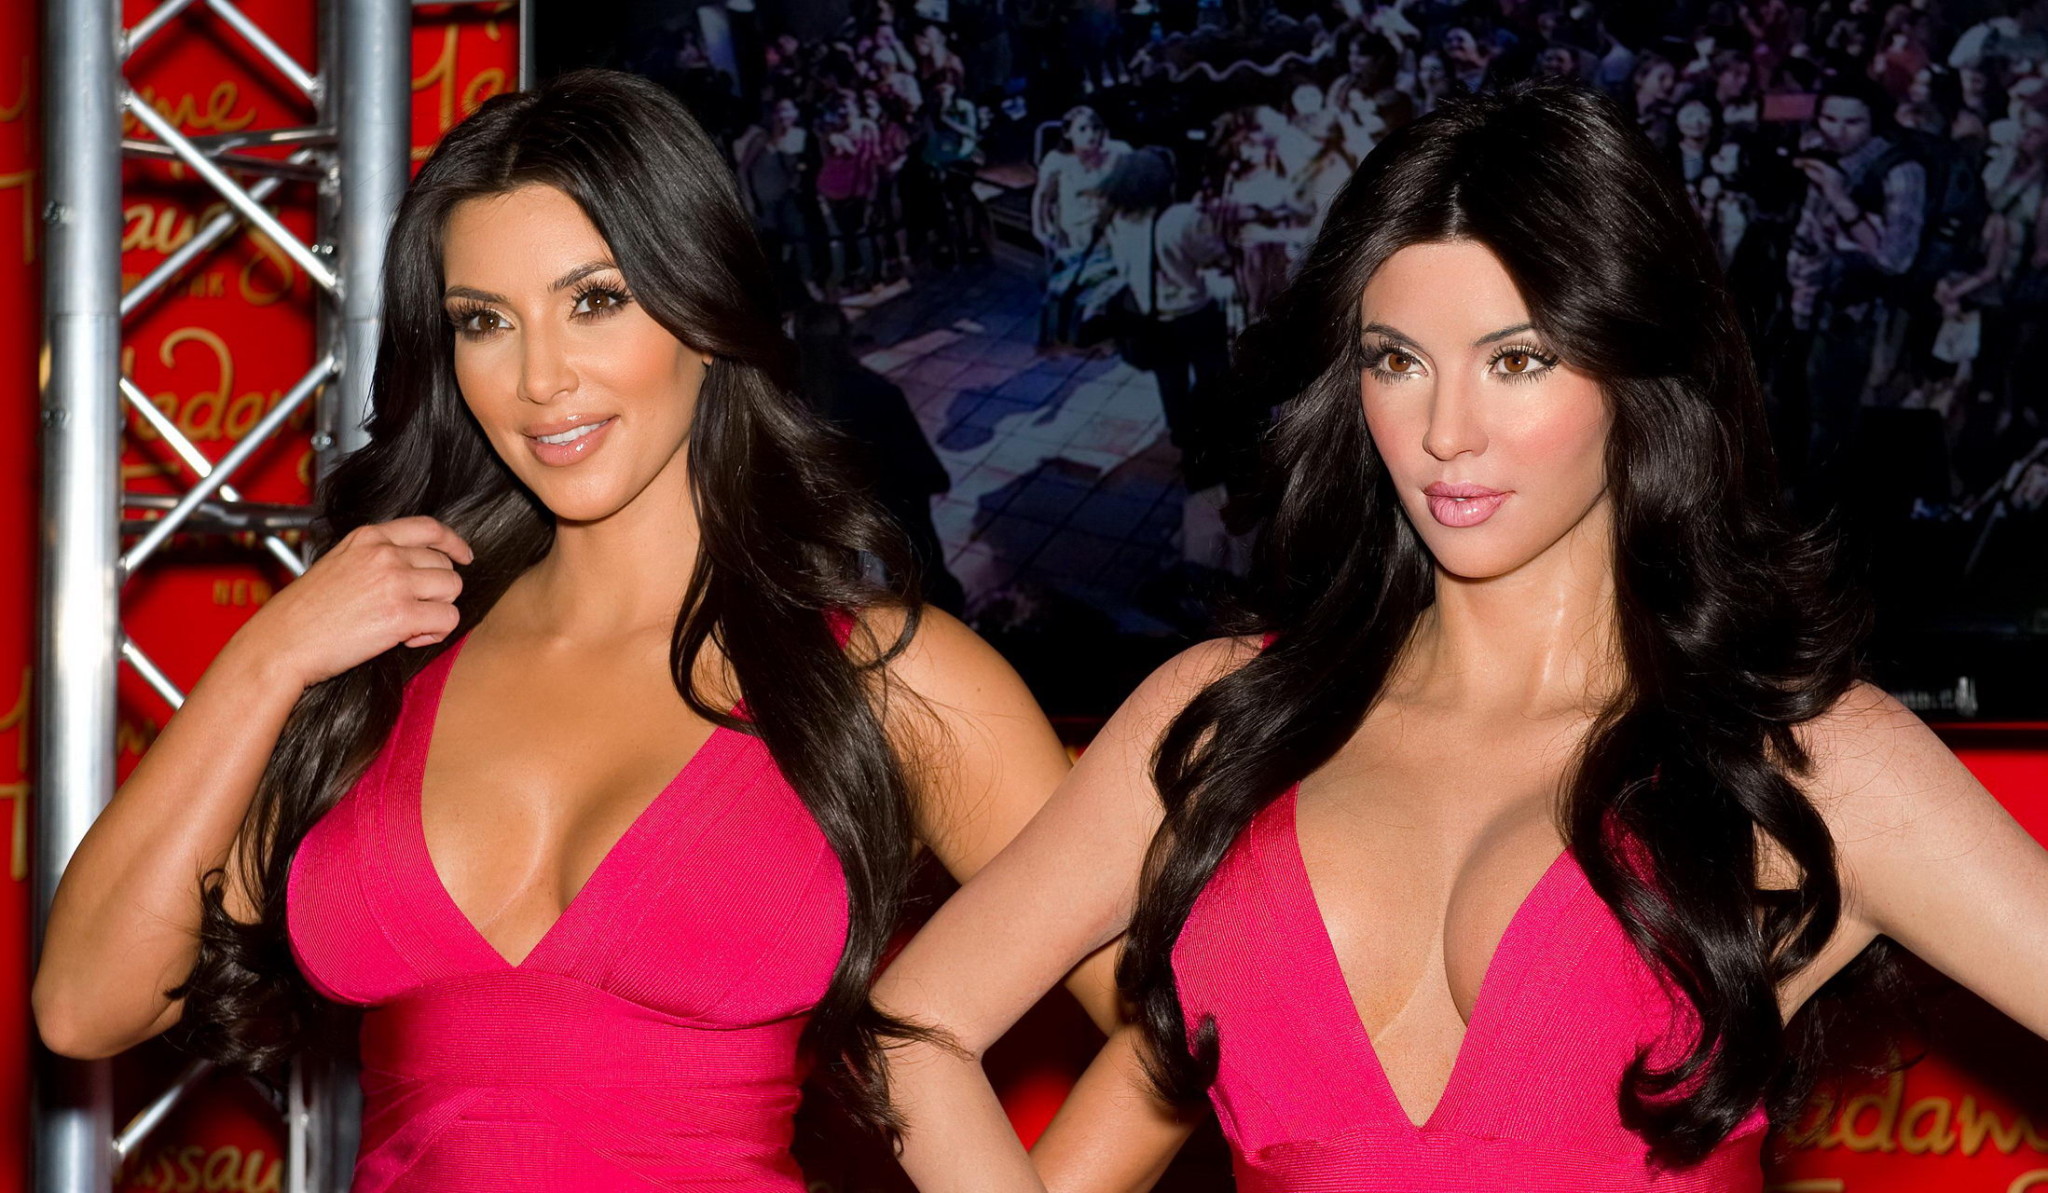 Kim Kardashian en robe rose moulante posant avec son mannequin de cire chez Madame Tus.
 #75342673